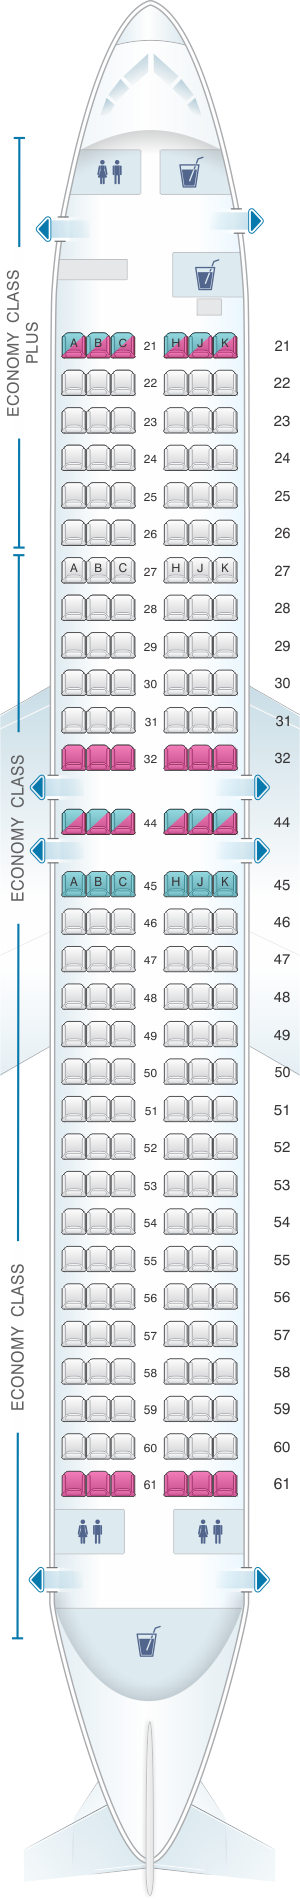 Seat map for El Al Israel Airlines Boeing B737 800 180pax